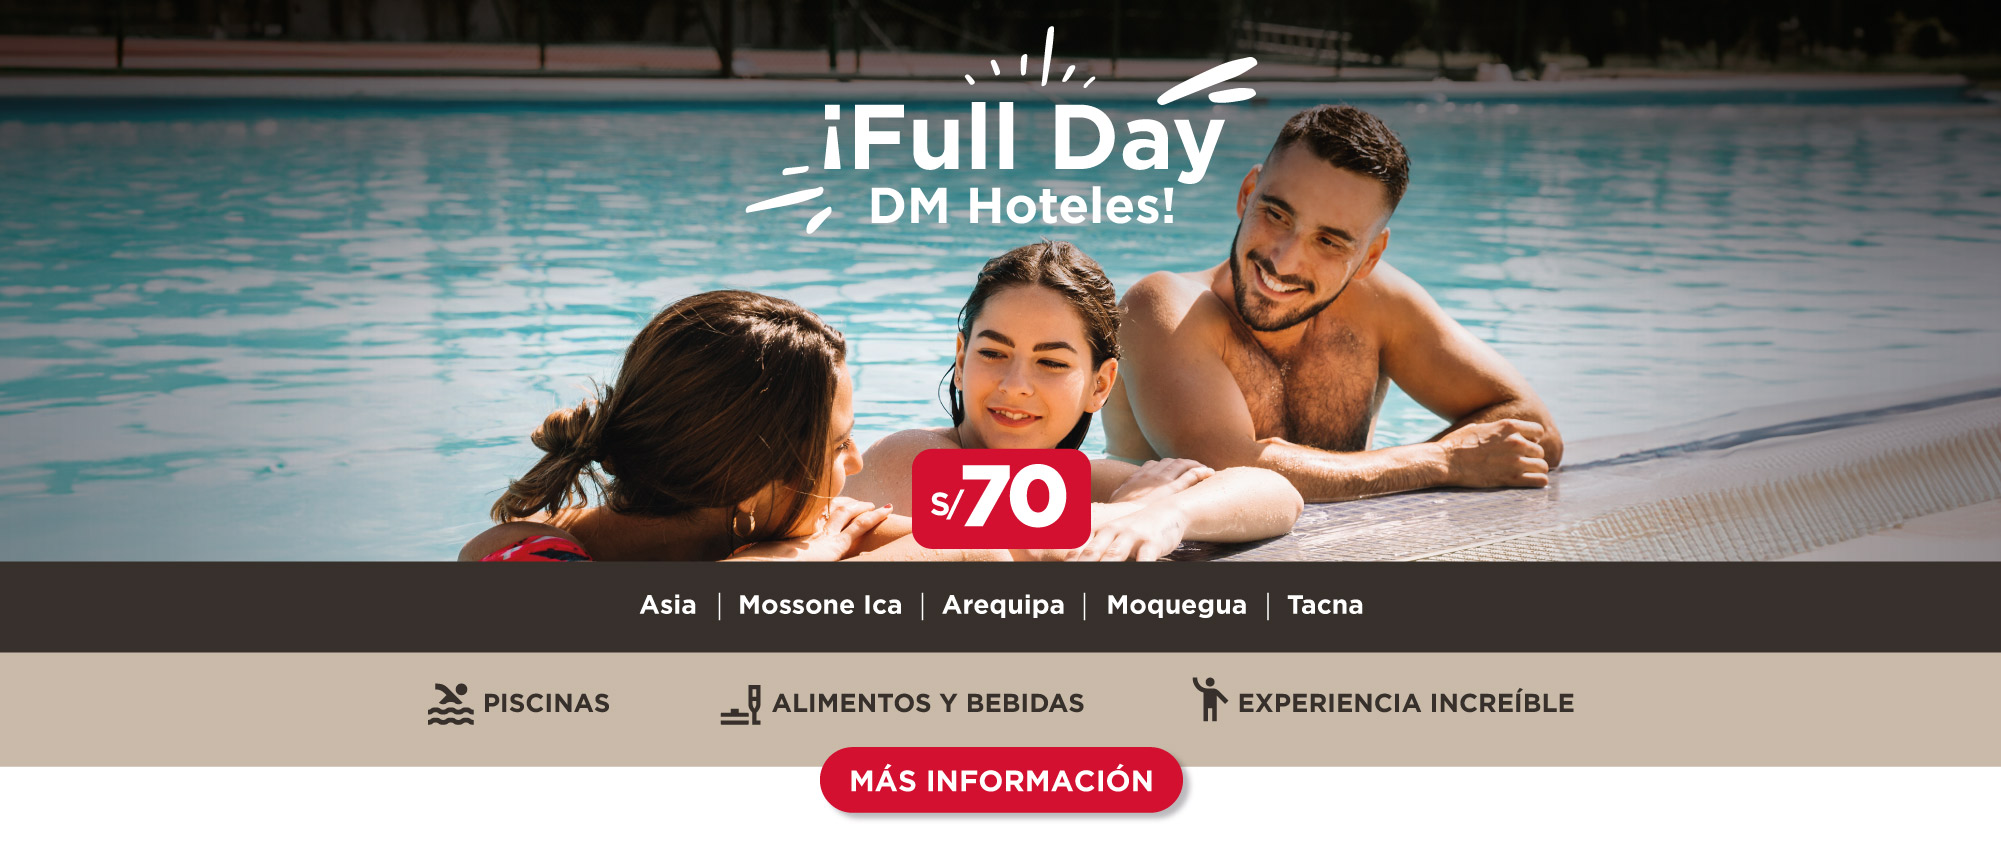 dm-hoteles-full-day-promocion-banner-web-1